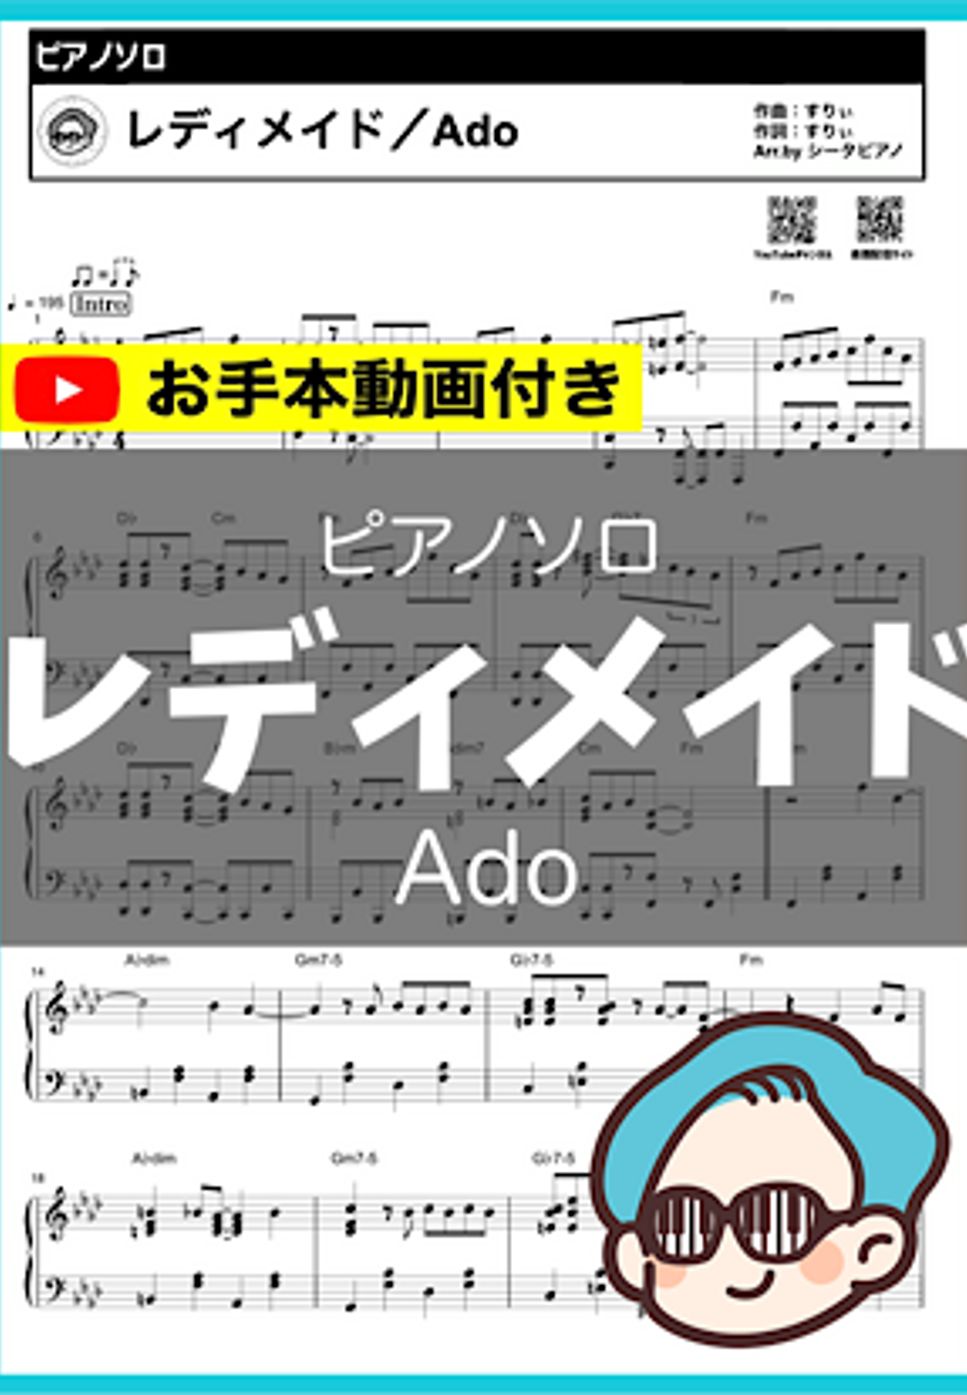 Ado - レディメイド by シータピアノ